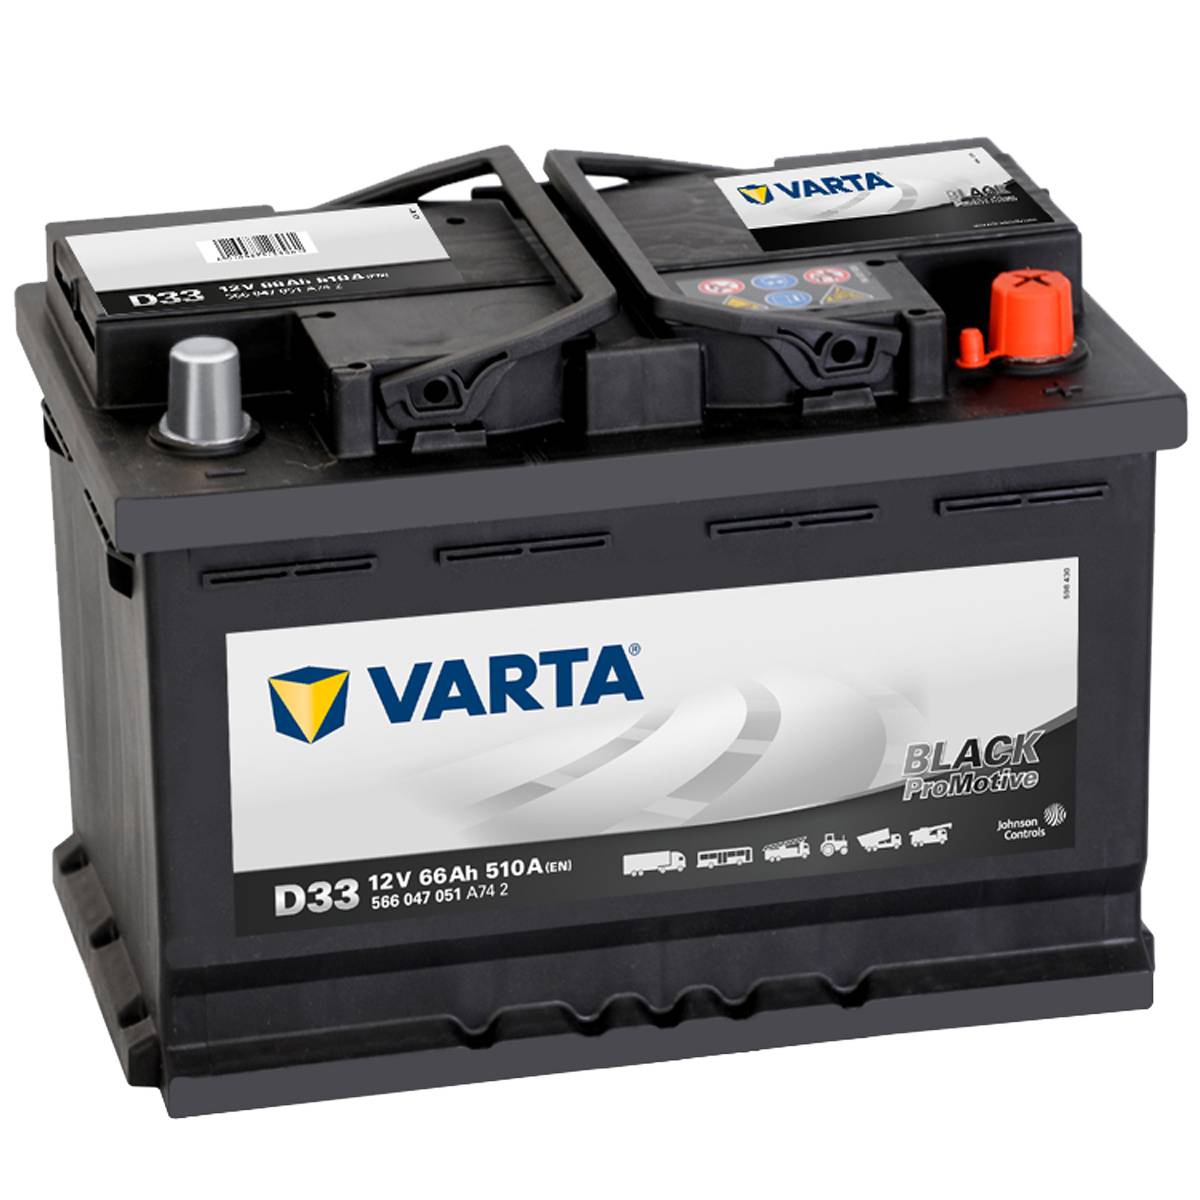 Varta D33 ProMotive Heavy Duty 12V V 66Ah 510A Truck Battery 566 047 051